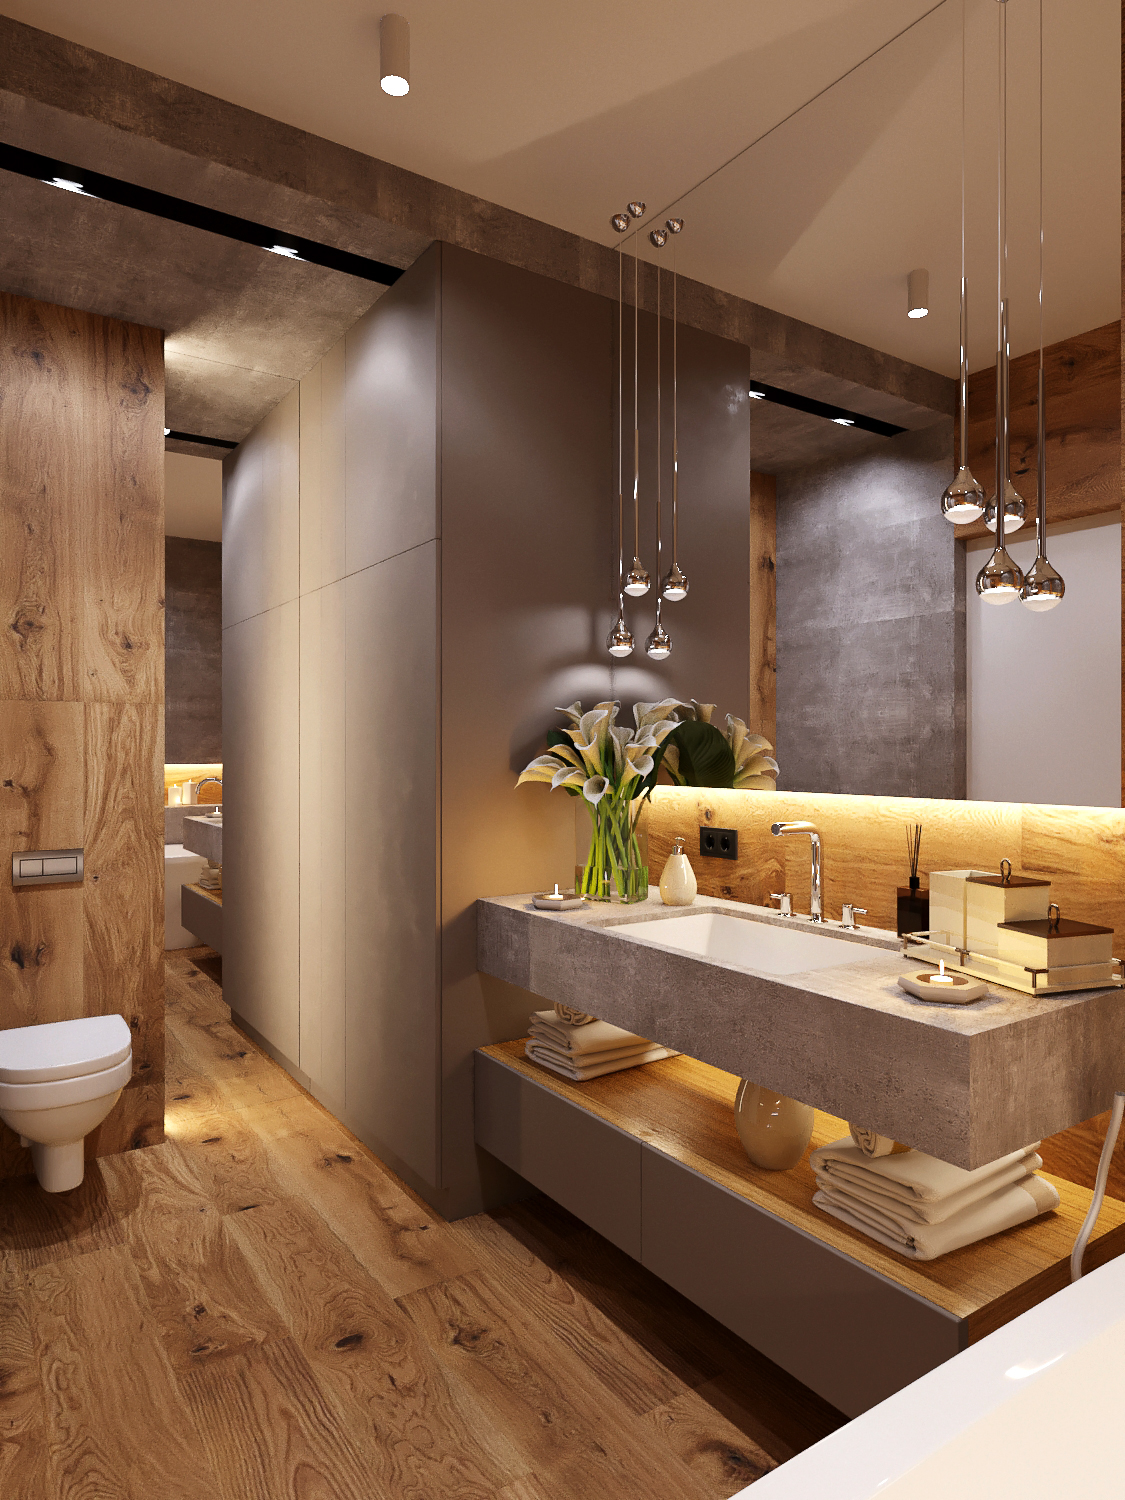 Bathroom Interior Design Ideas: Designing A Relaxing Retreat